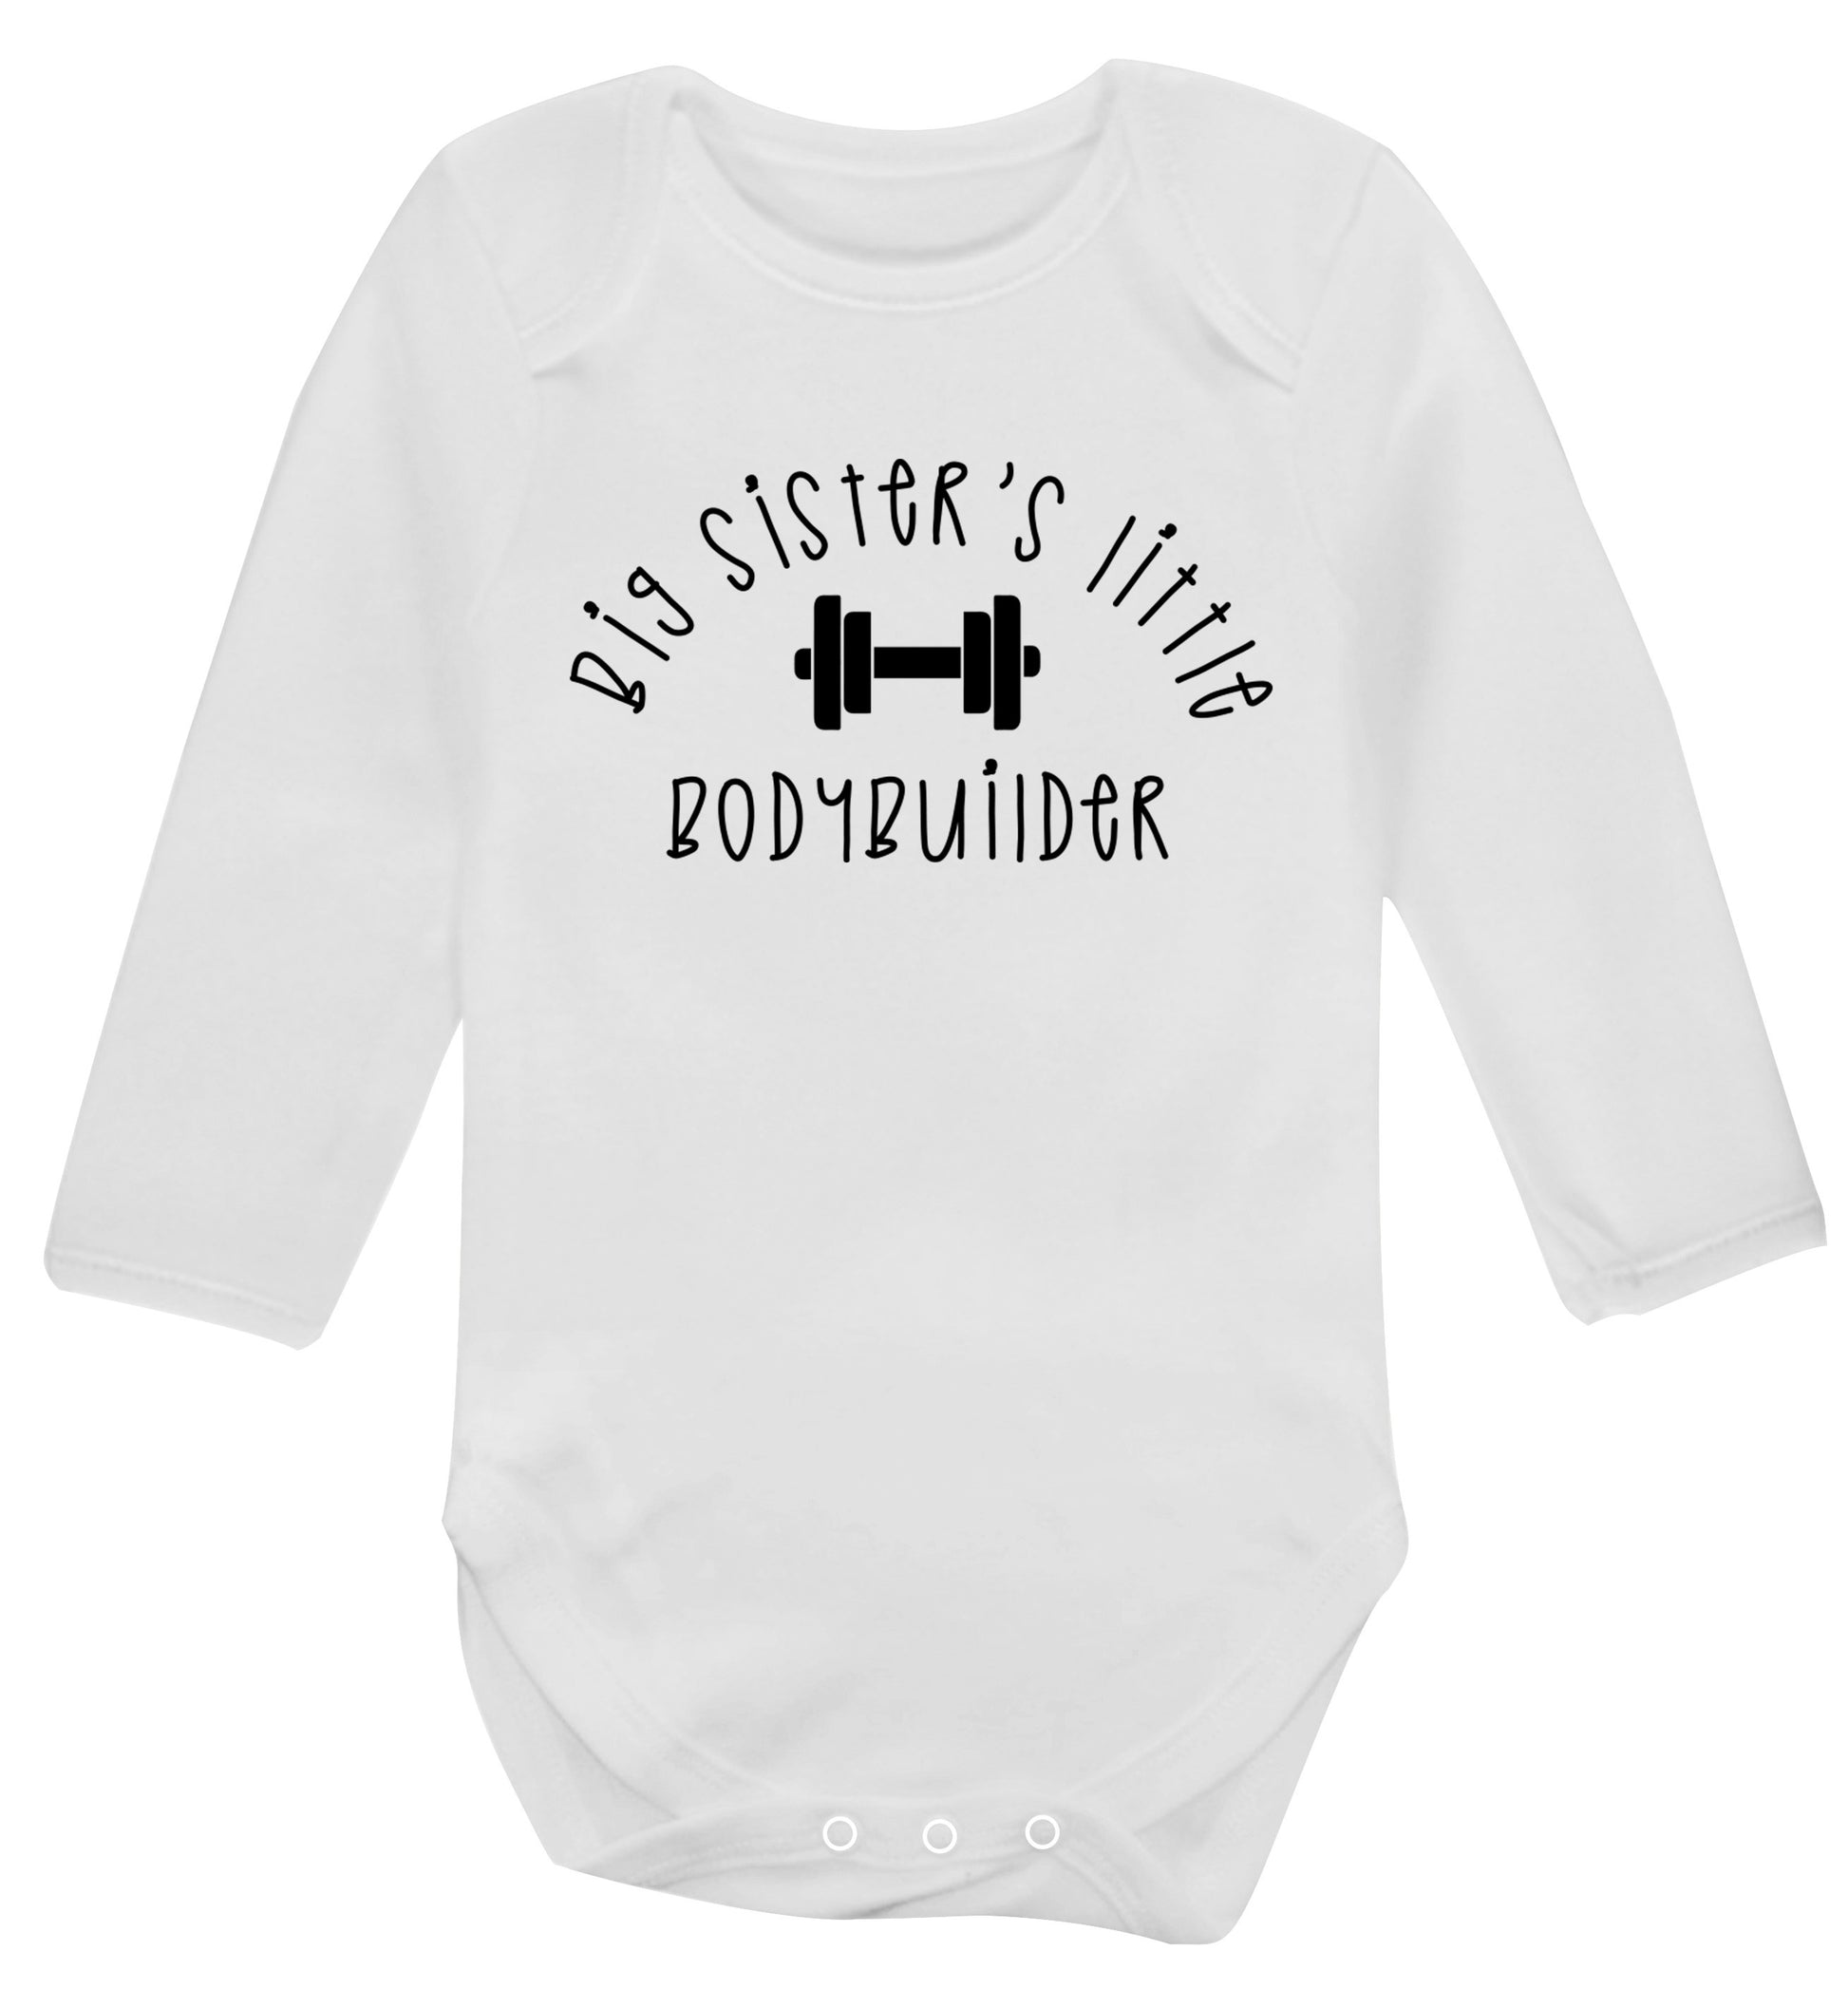 Big sister's little bodybuilder Baby Vest long sleeved white 6-12 months